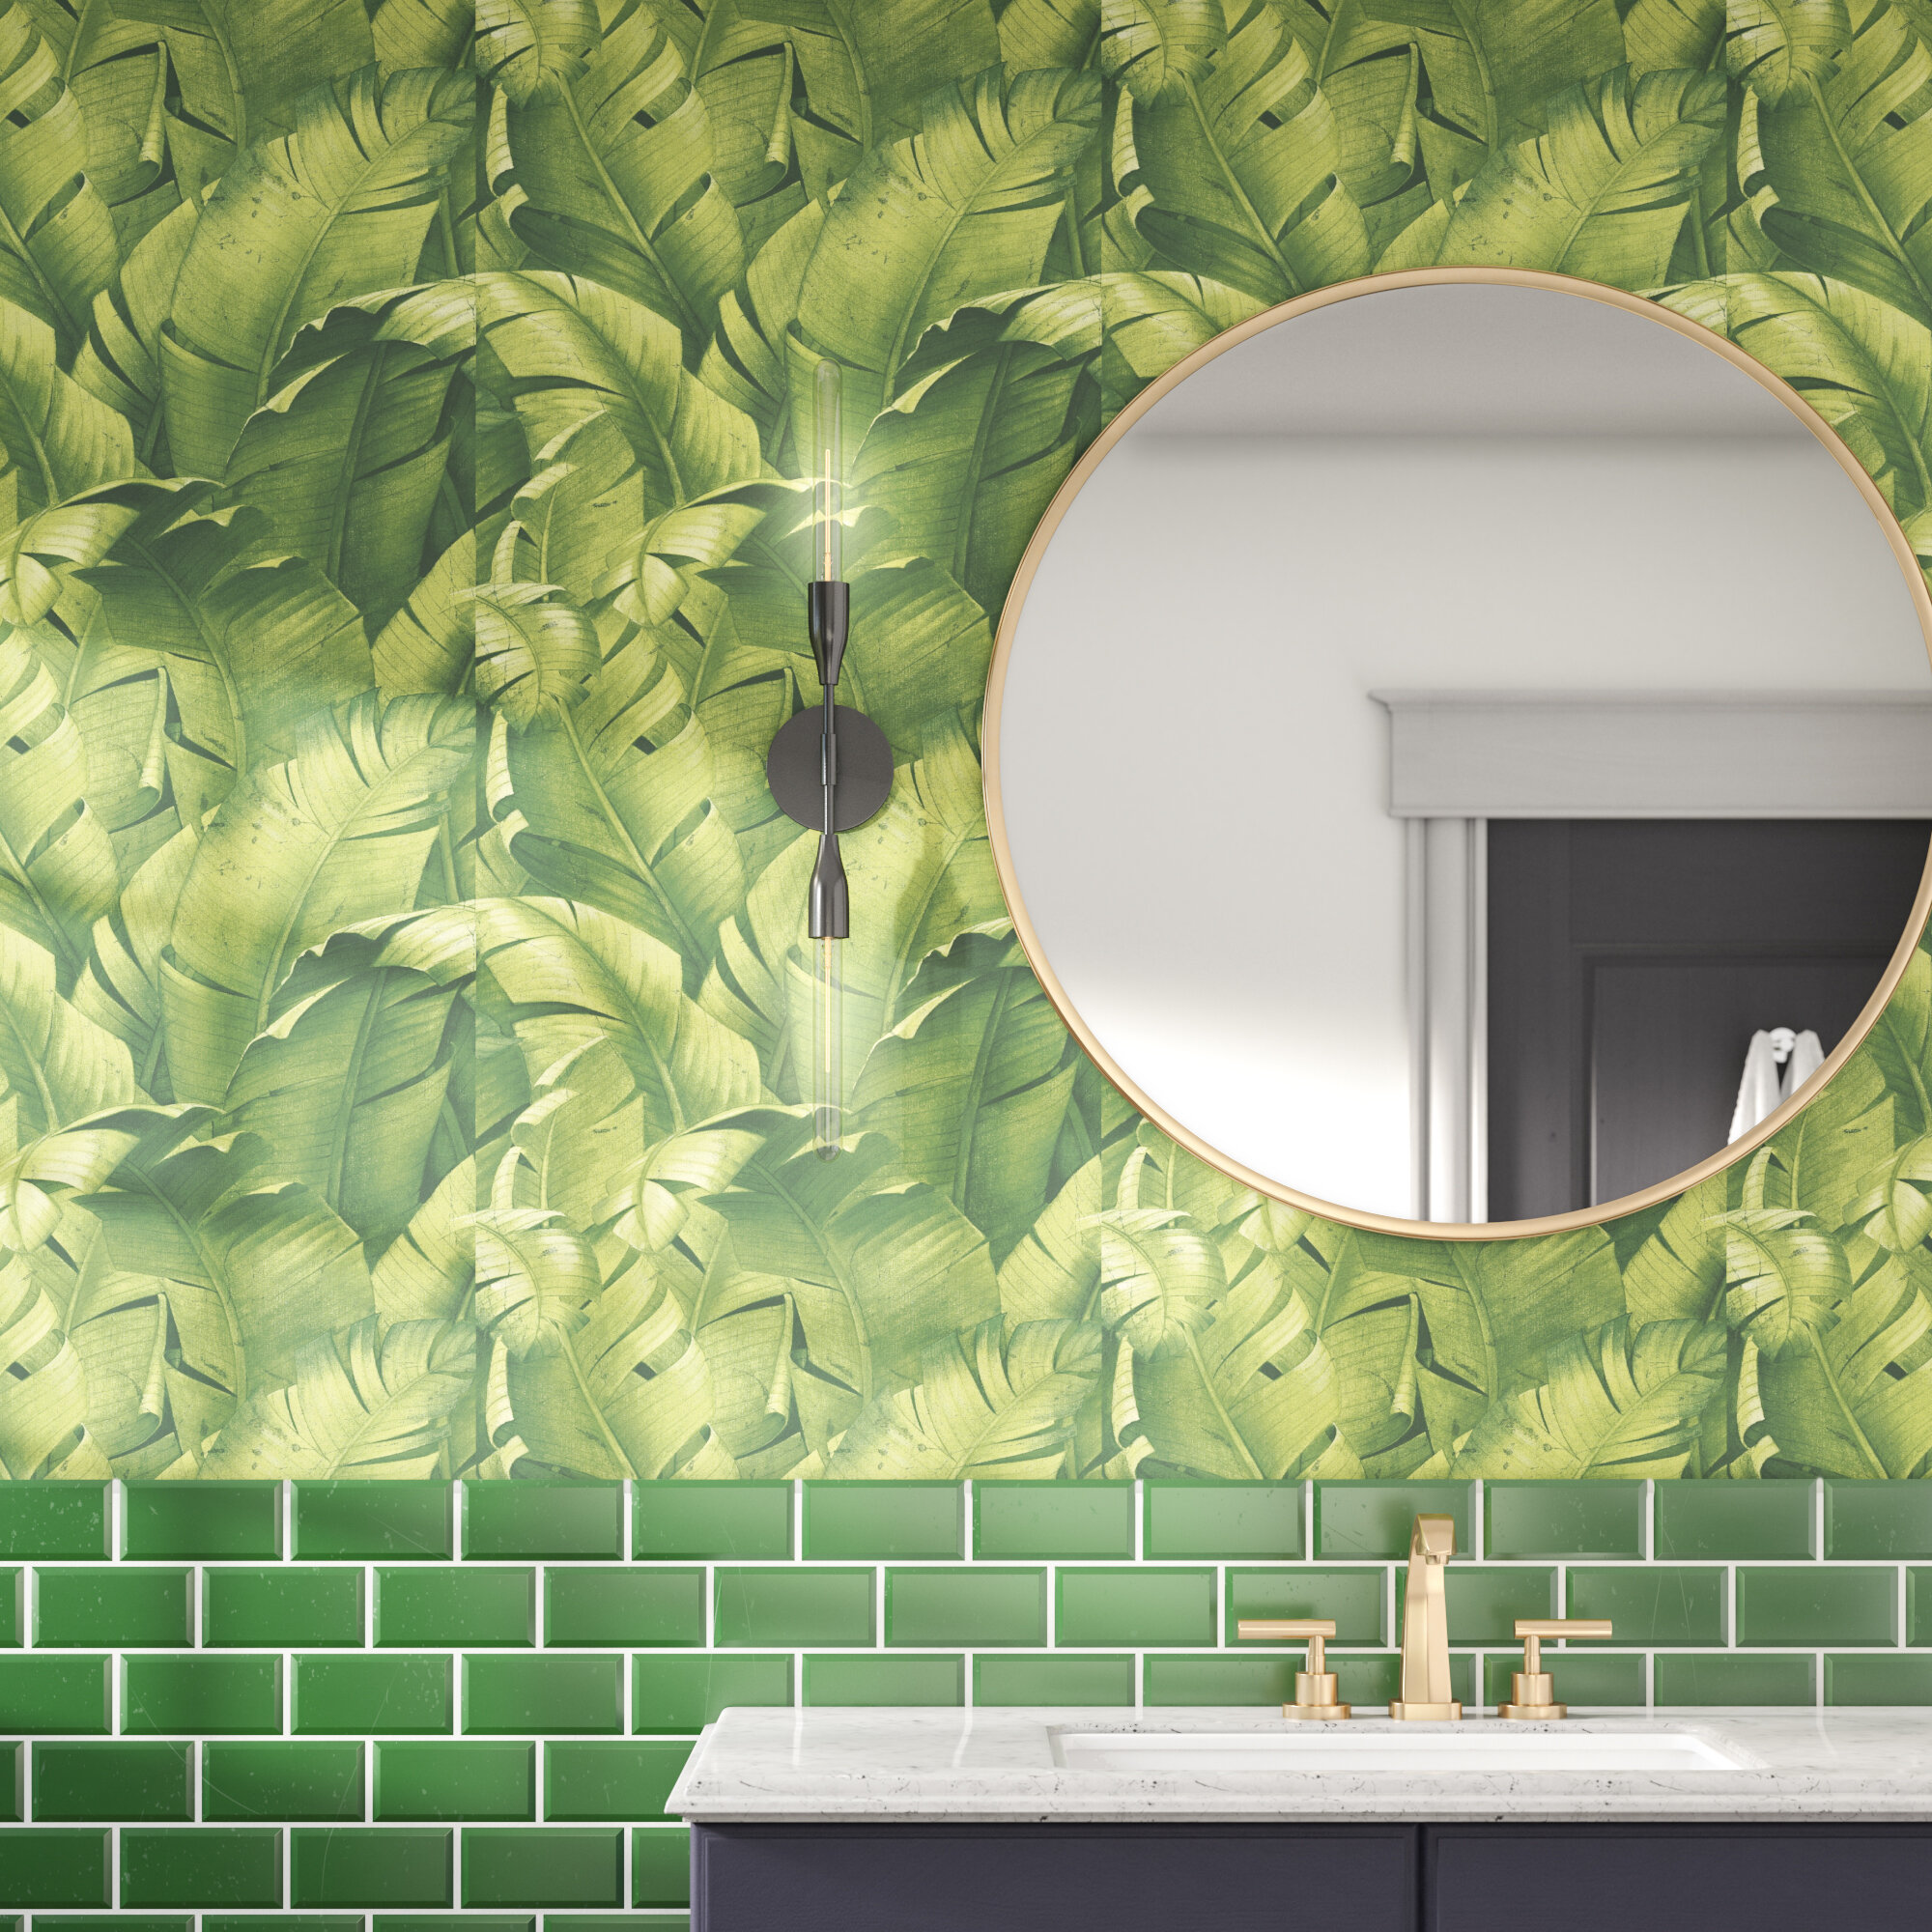 Removable Wallpaper With Banana Leaf Print Banana Leaves Peel  Etsy   Wallpaper living room Discount bedroom furniture Leaf wallpaper